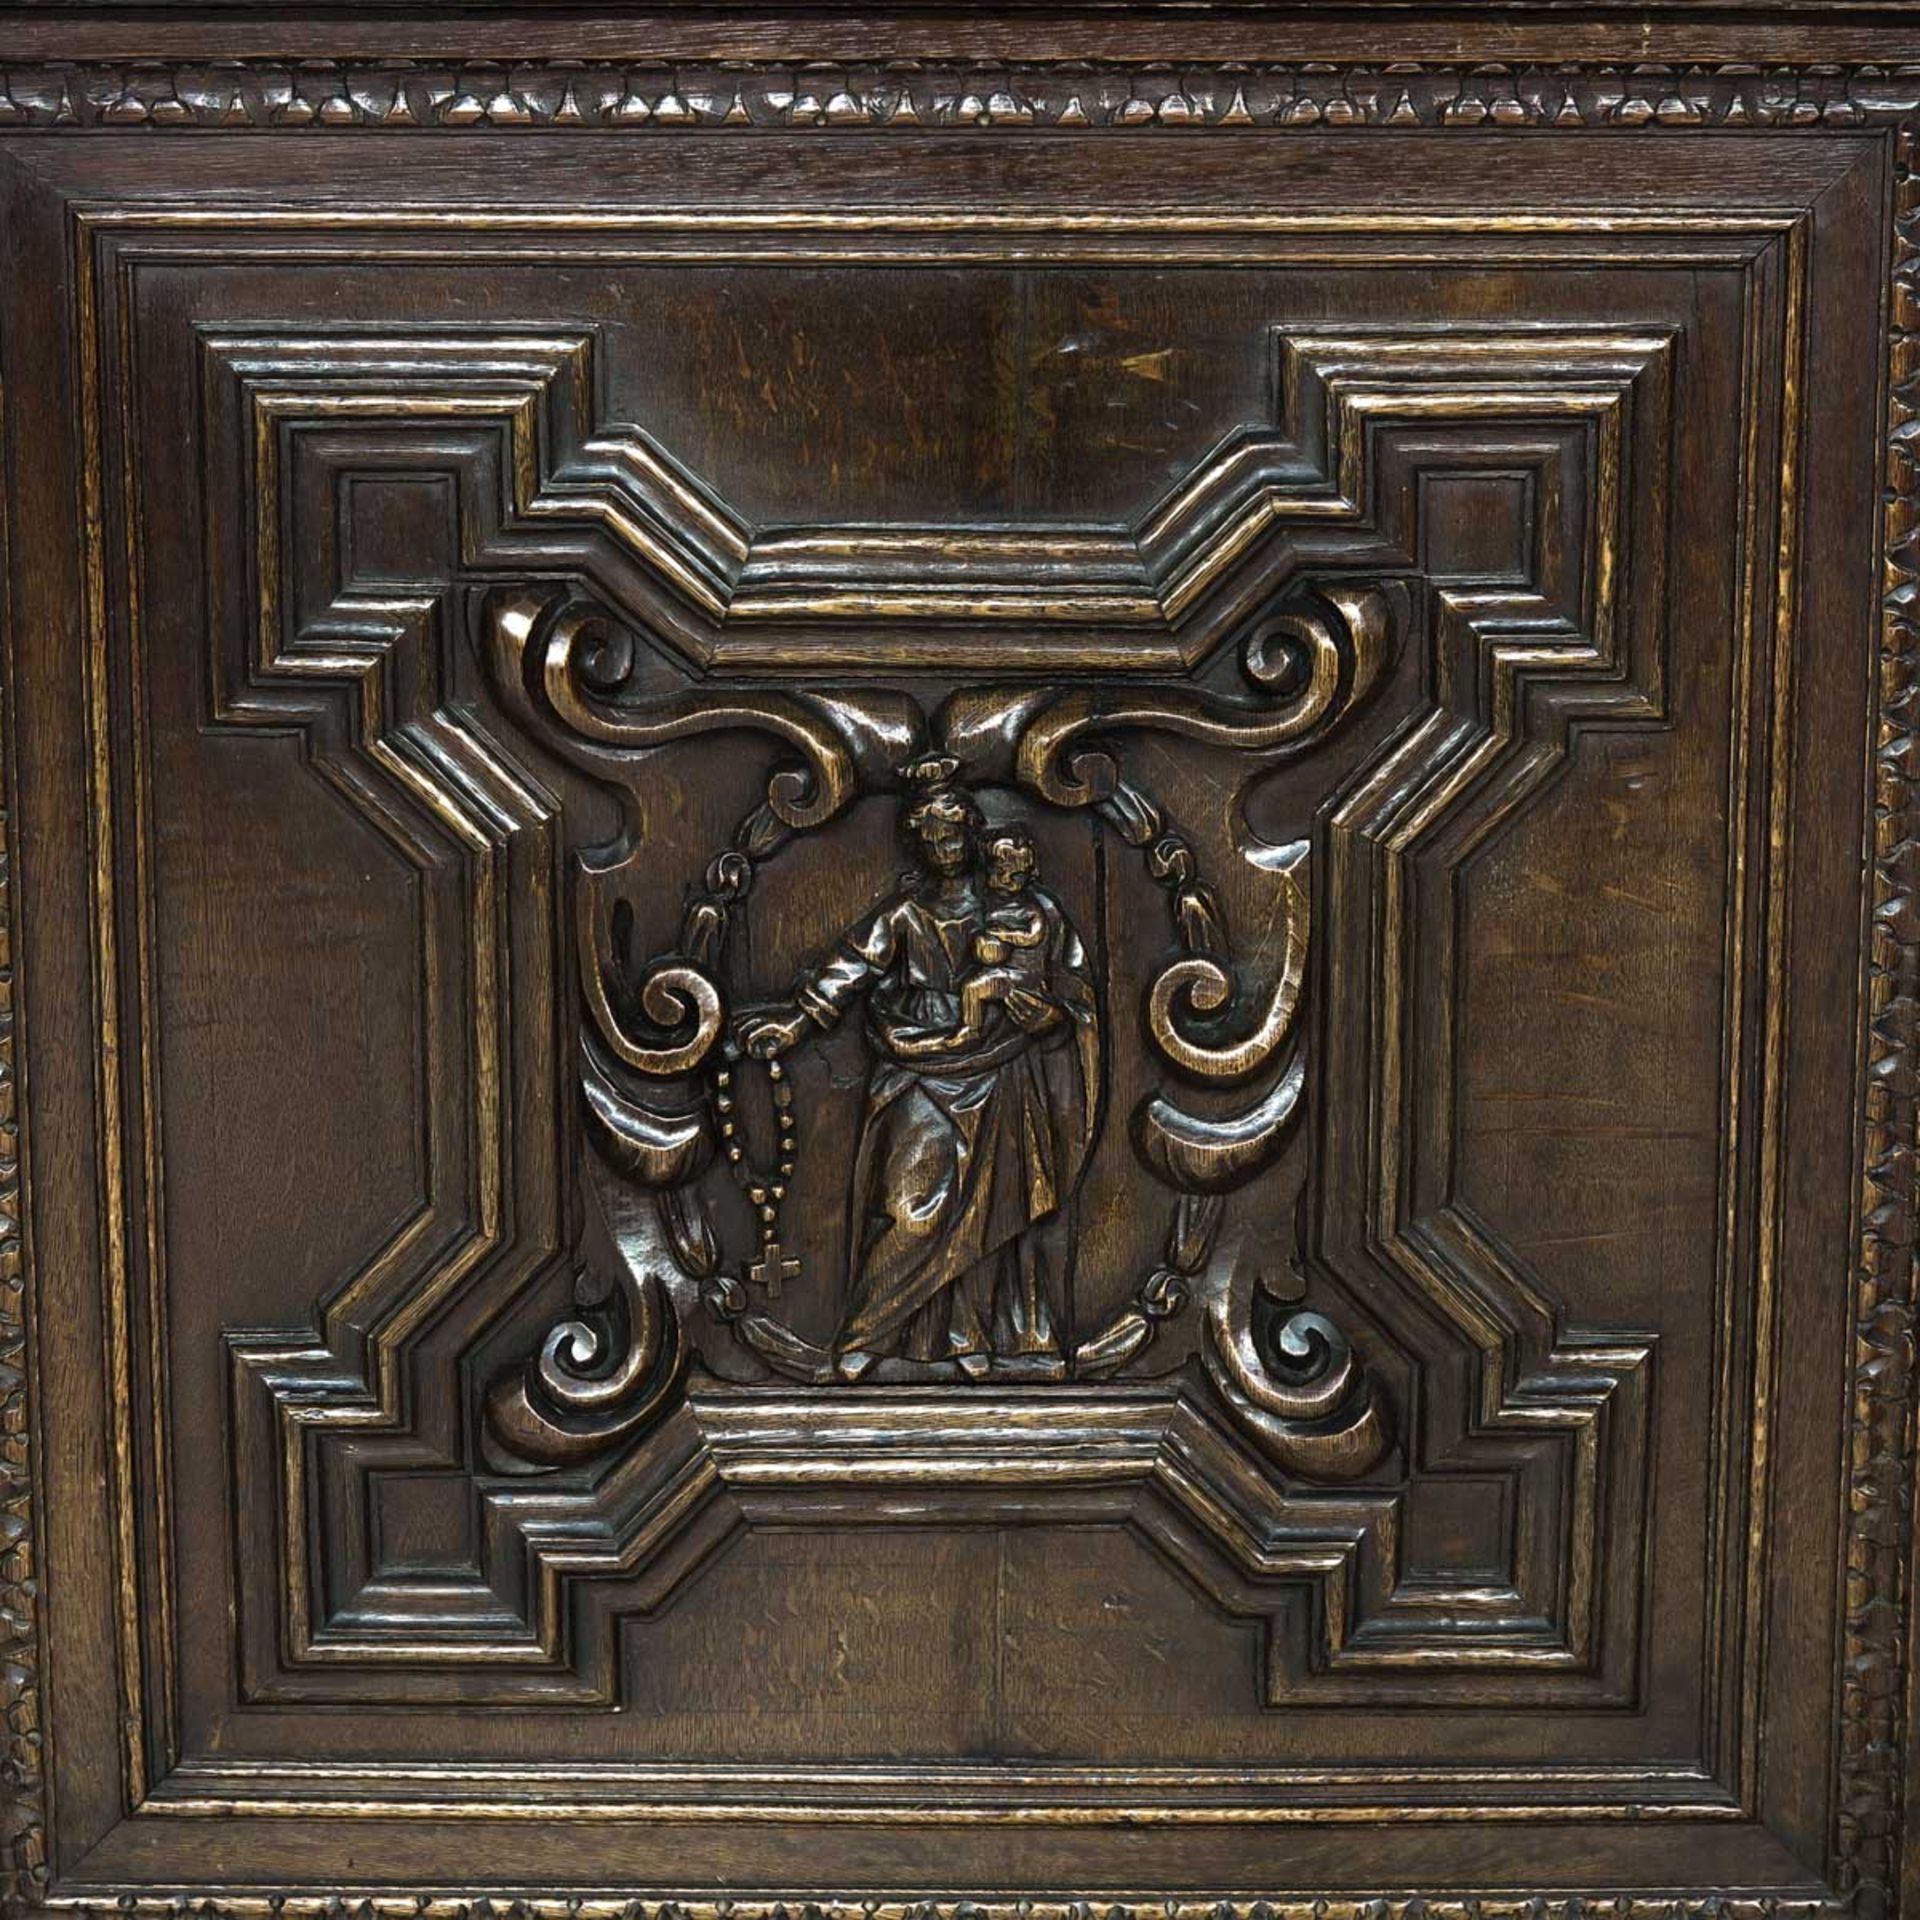 A Brugge Belgium Carved Cabinet Circa 1660 - 1680 - Image 8 of 10